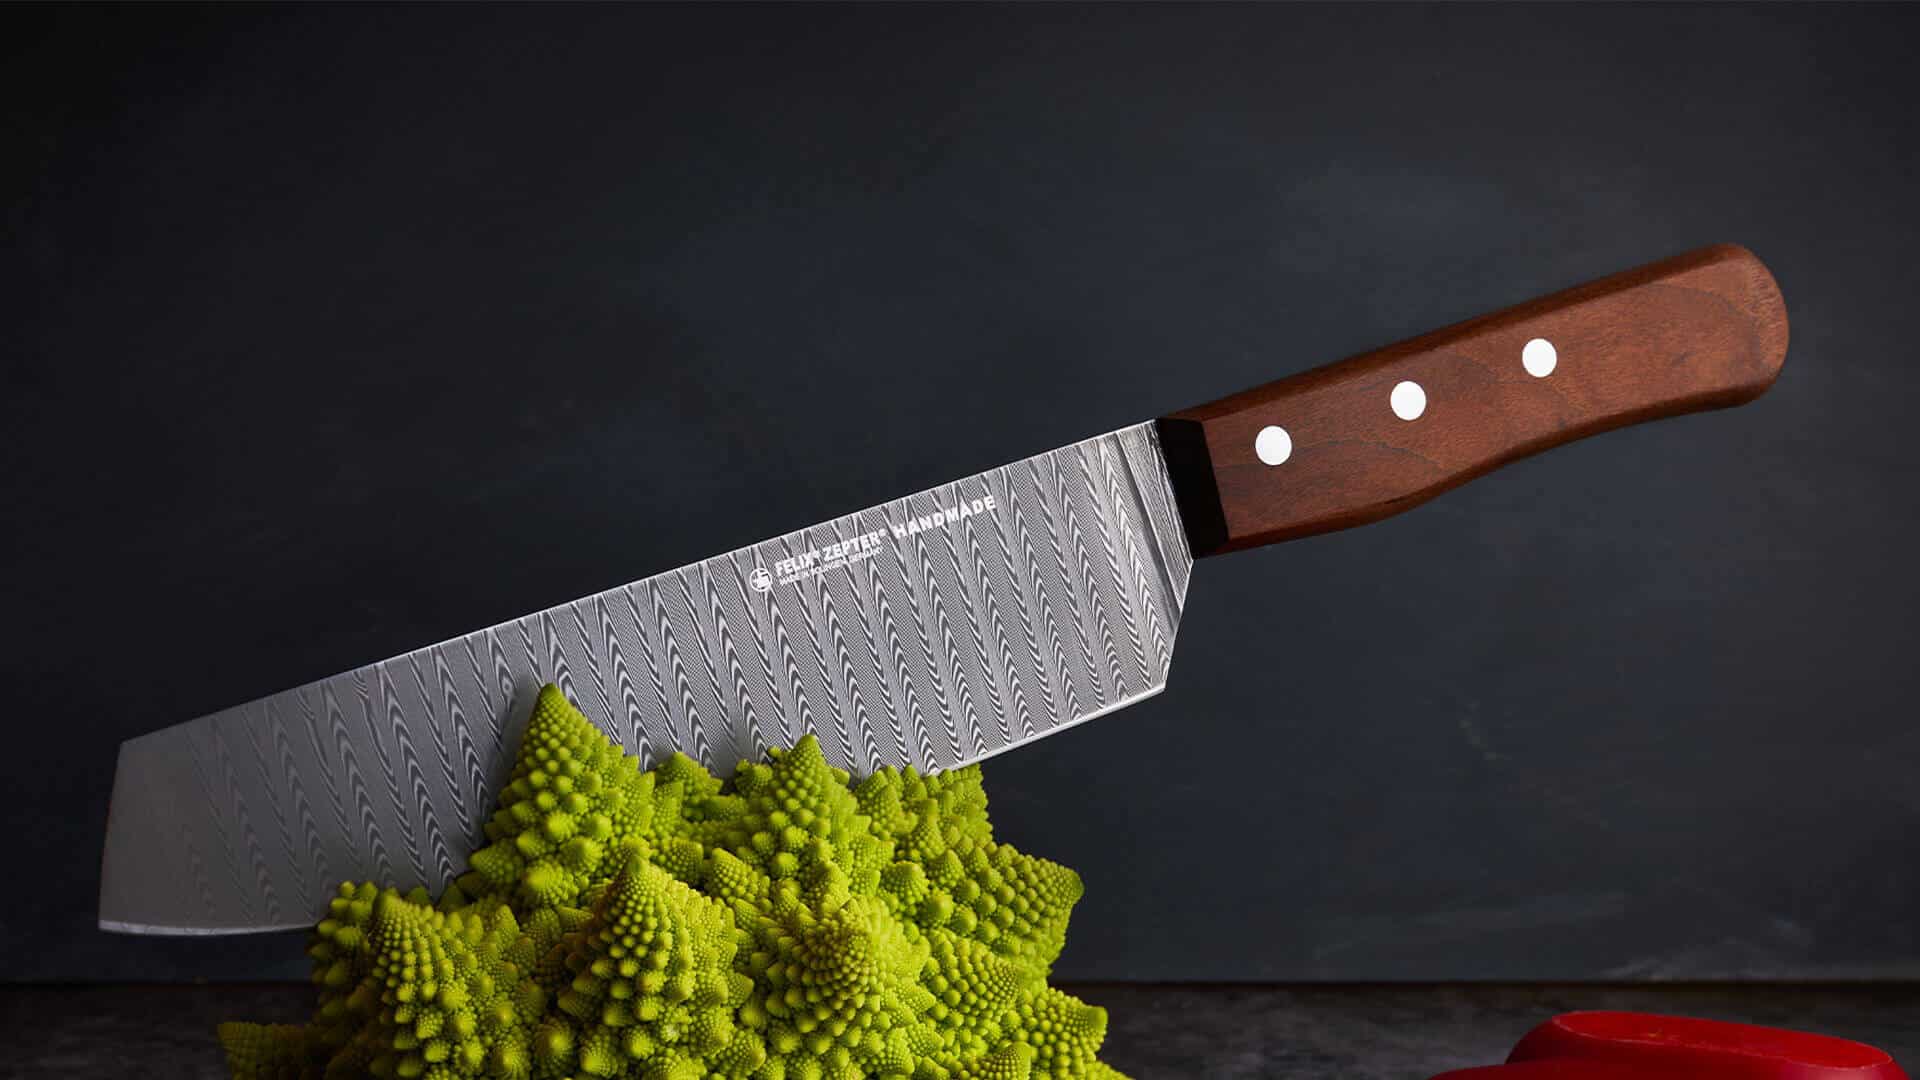 felix-sirius-chef-knife-damascus-steel-from-solingen-profi